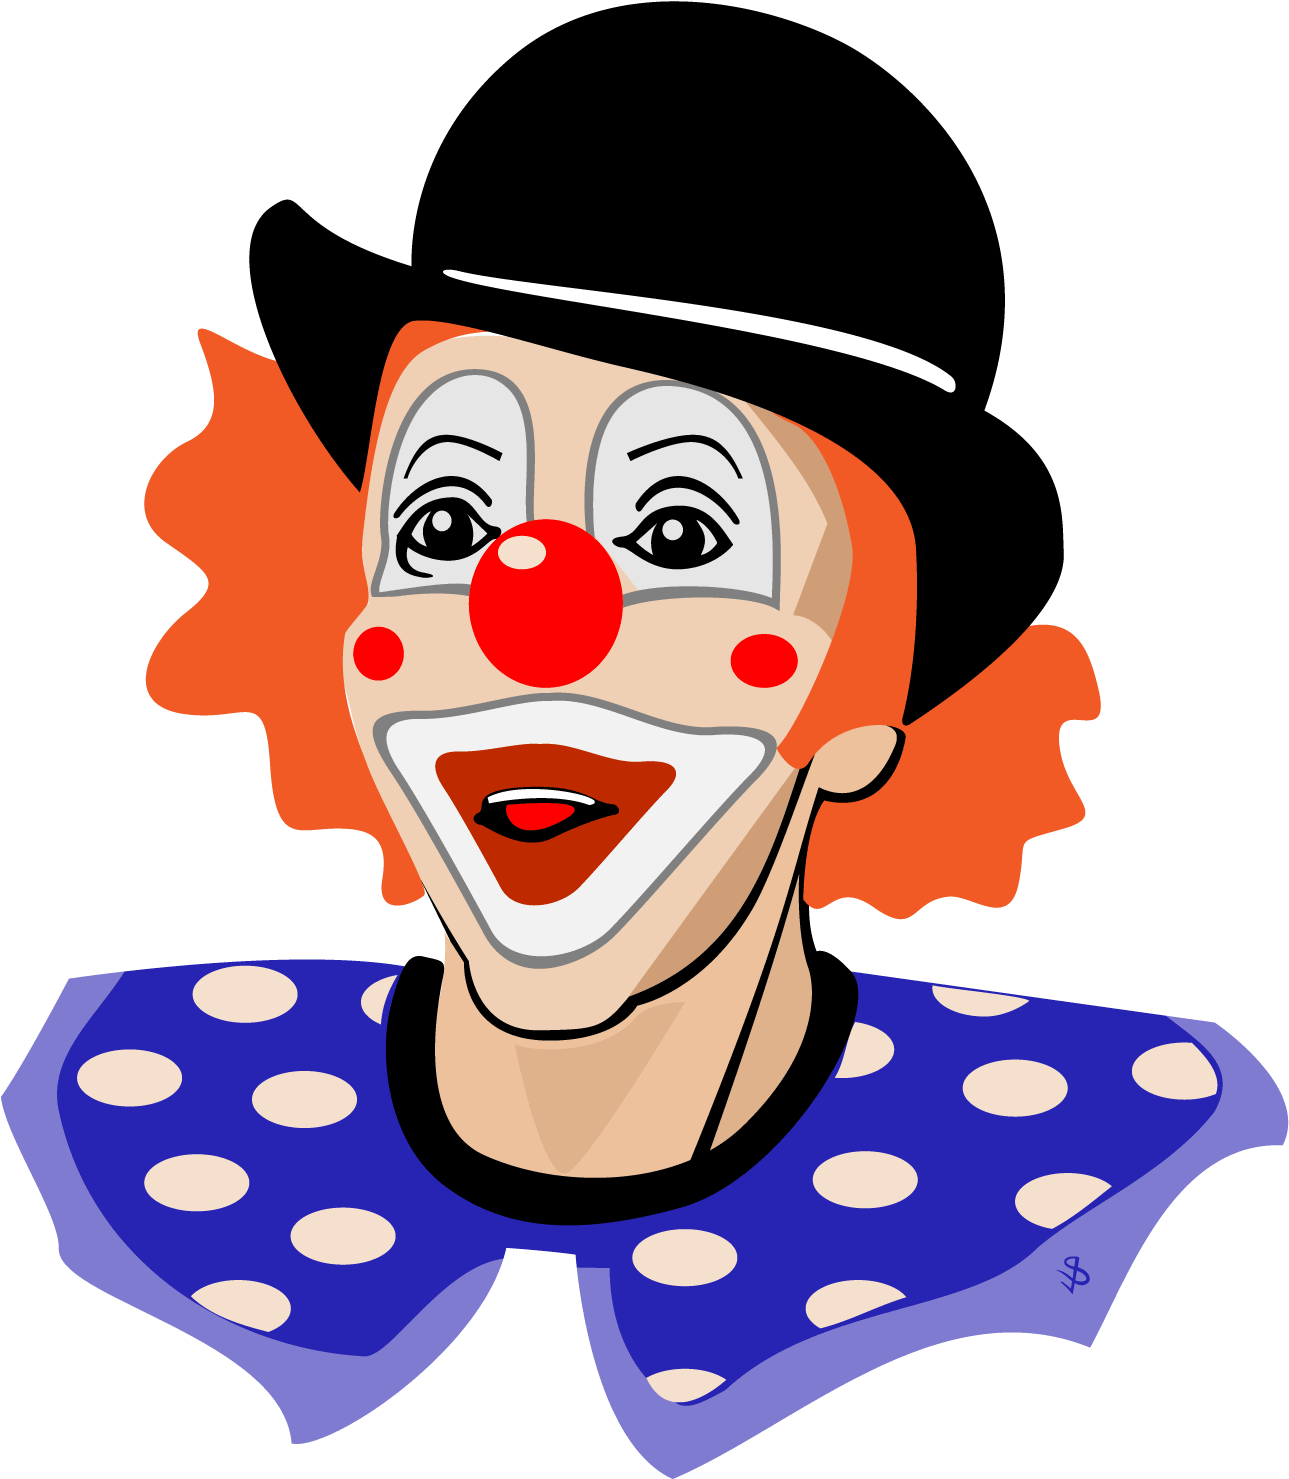 Рисование маска клоуна. Грим клоуна. Весёлые клоуны. Лицо клоуна. Клоун векторный рисунок.